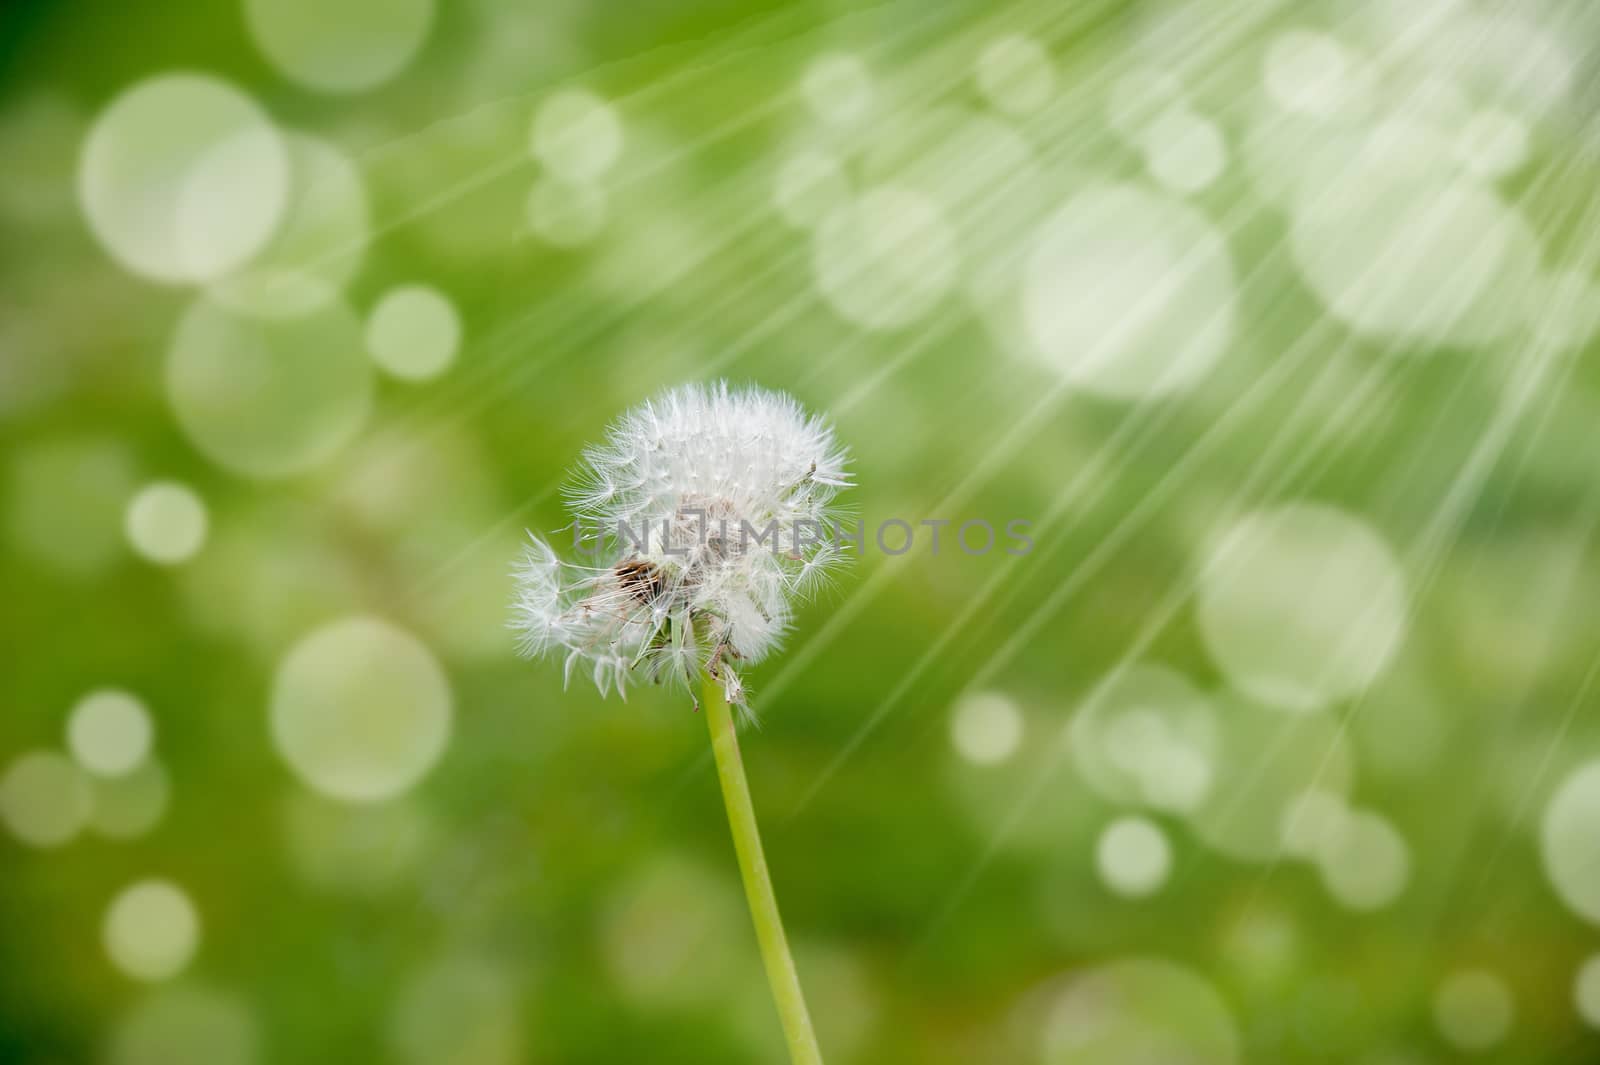 Dandelion in the wind by raduga21